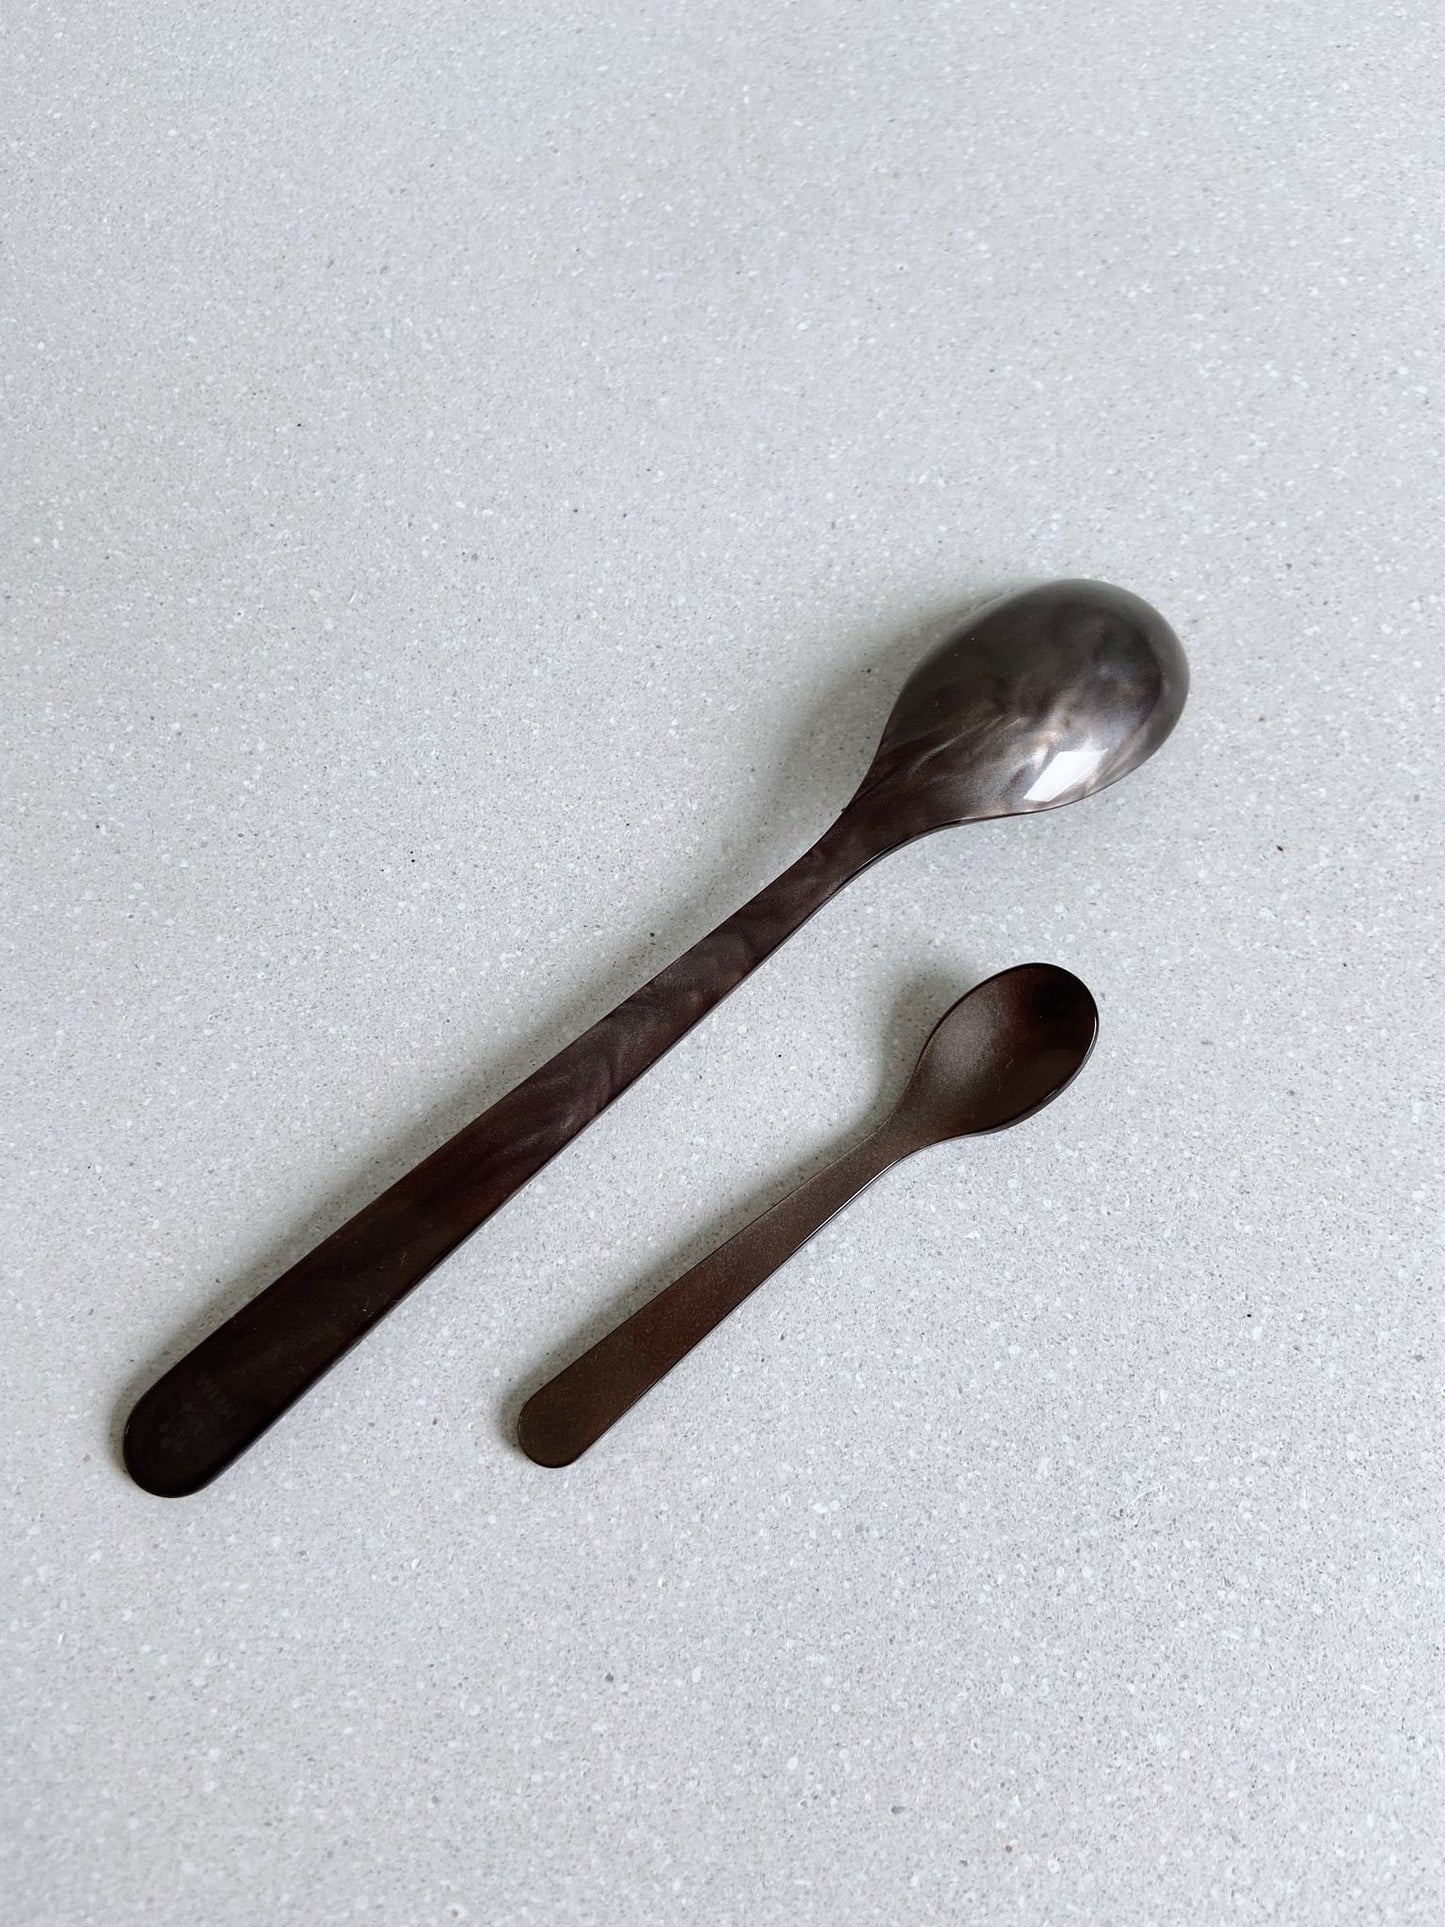 Espresso spoon